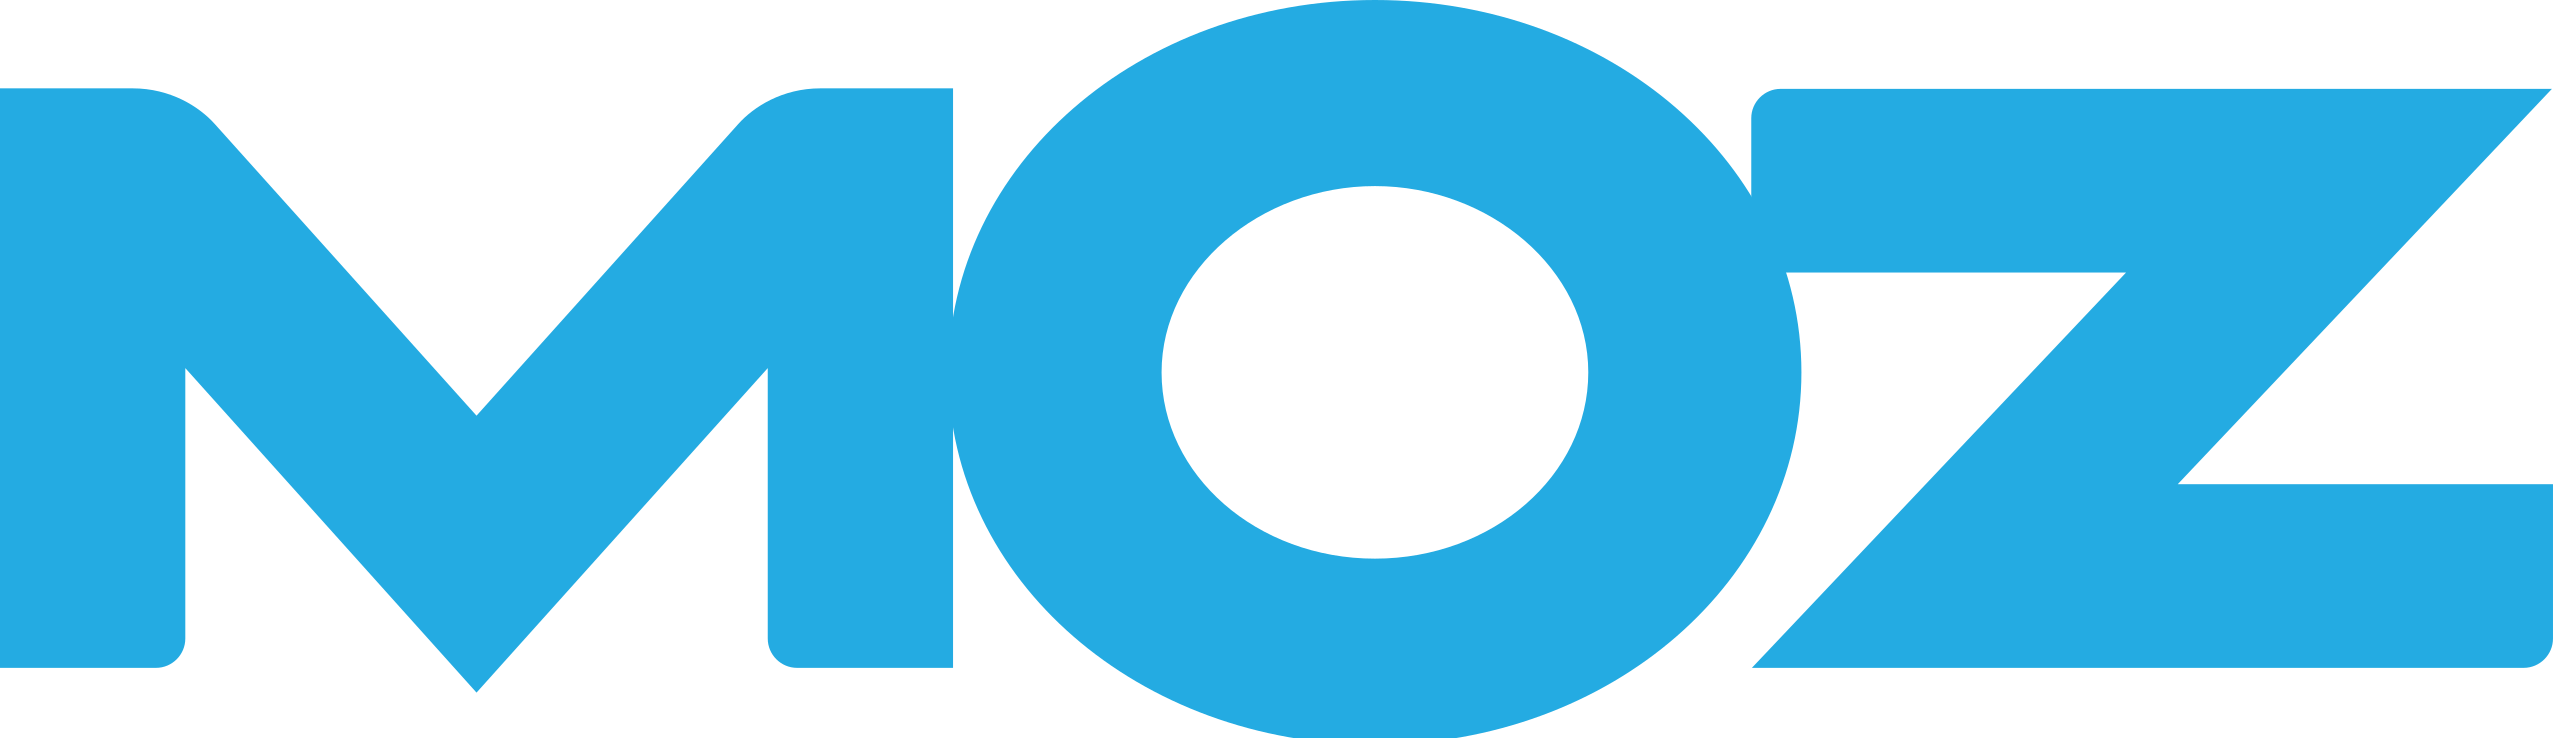 Moz logo.svg - 外贸建站资源导航 - NUTSWP